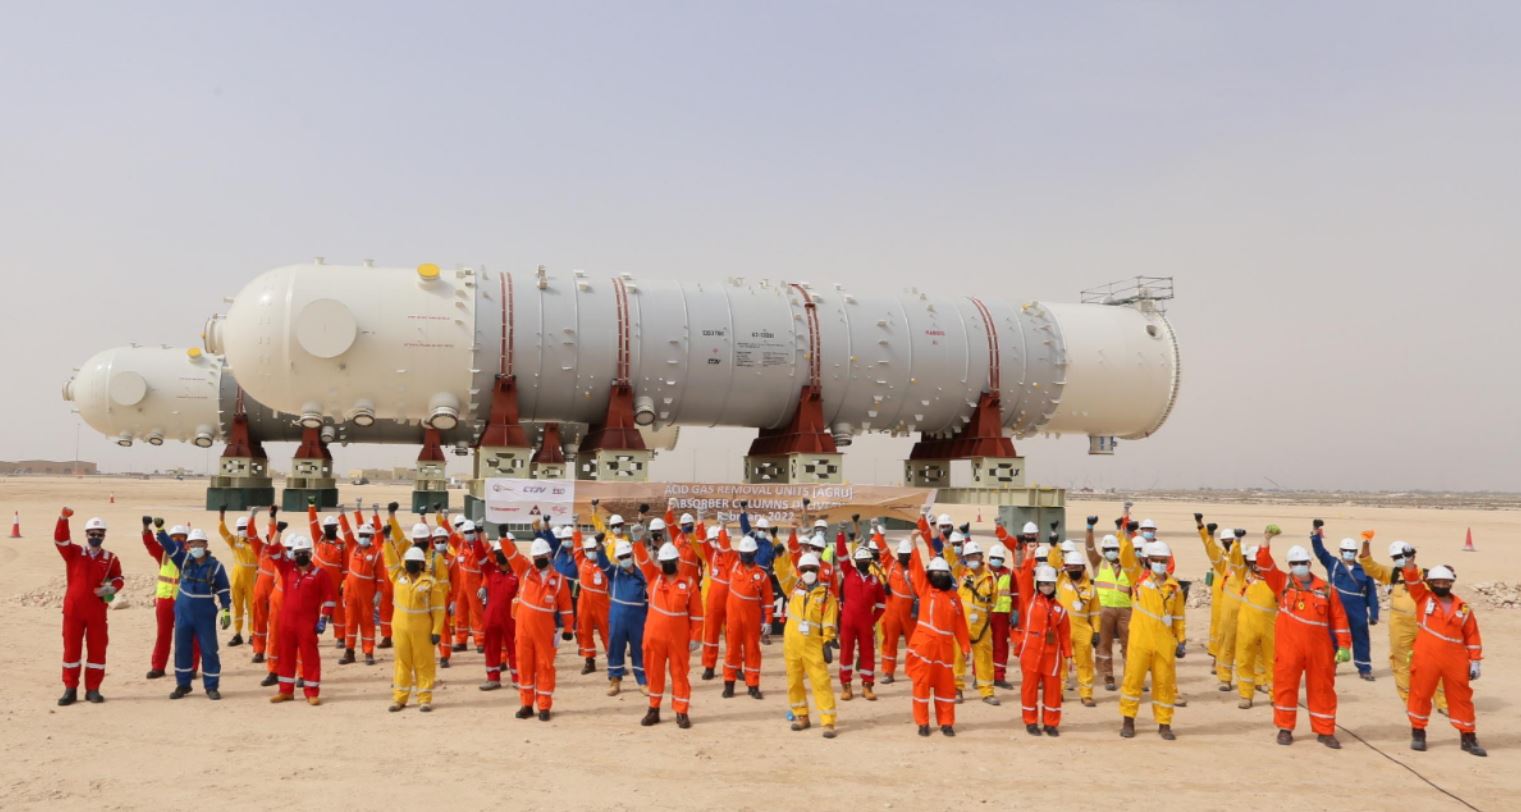 Technip Energies, Chiyoda moving forward with Qatari LNG expansion work